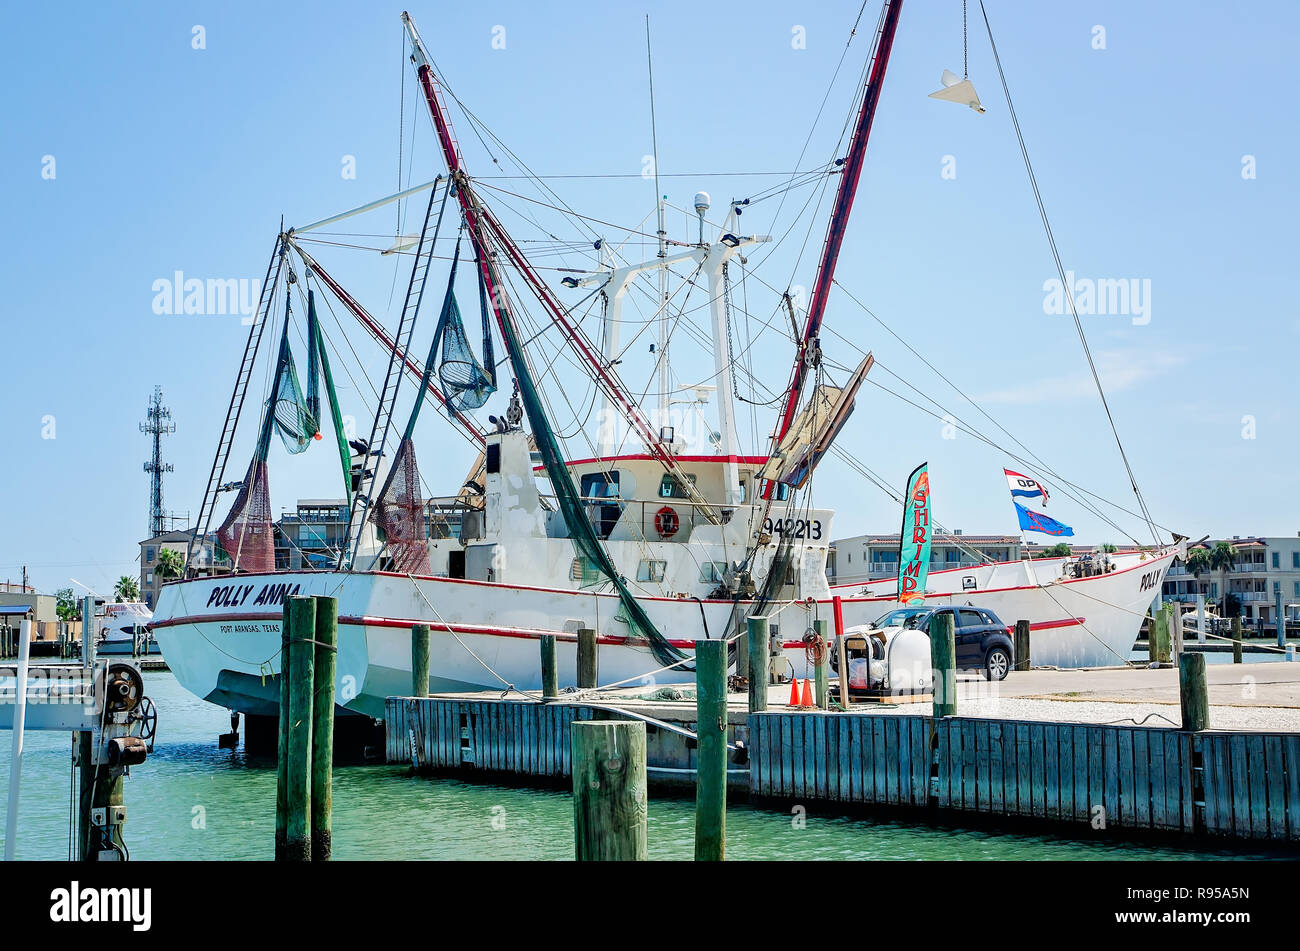 Polly Anna sits docked in Port Aransas Municipal Boat Harbor, Aug. 23, 2018, in Port Aransas, Texas. Stock Photo